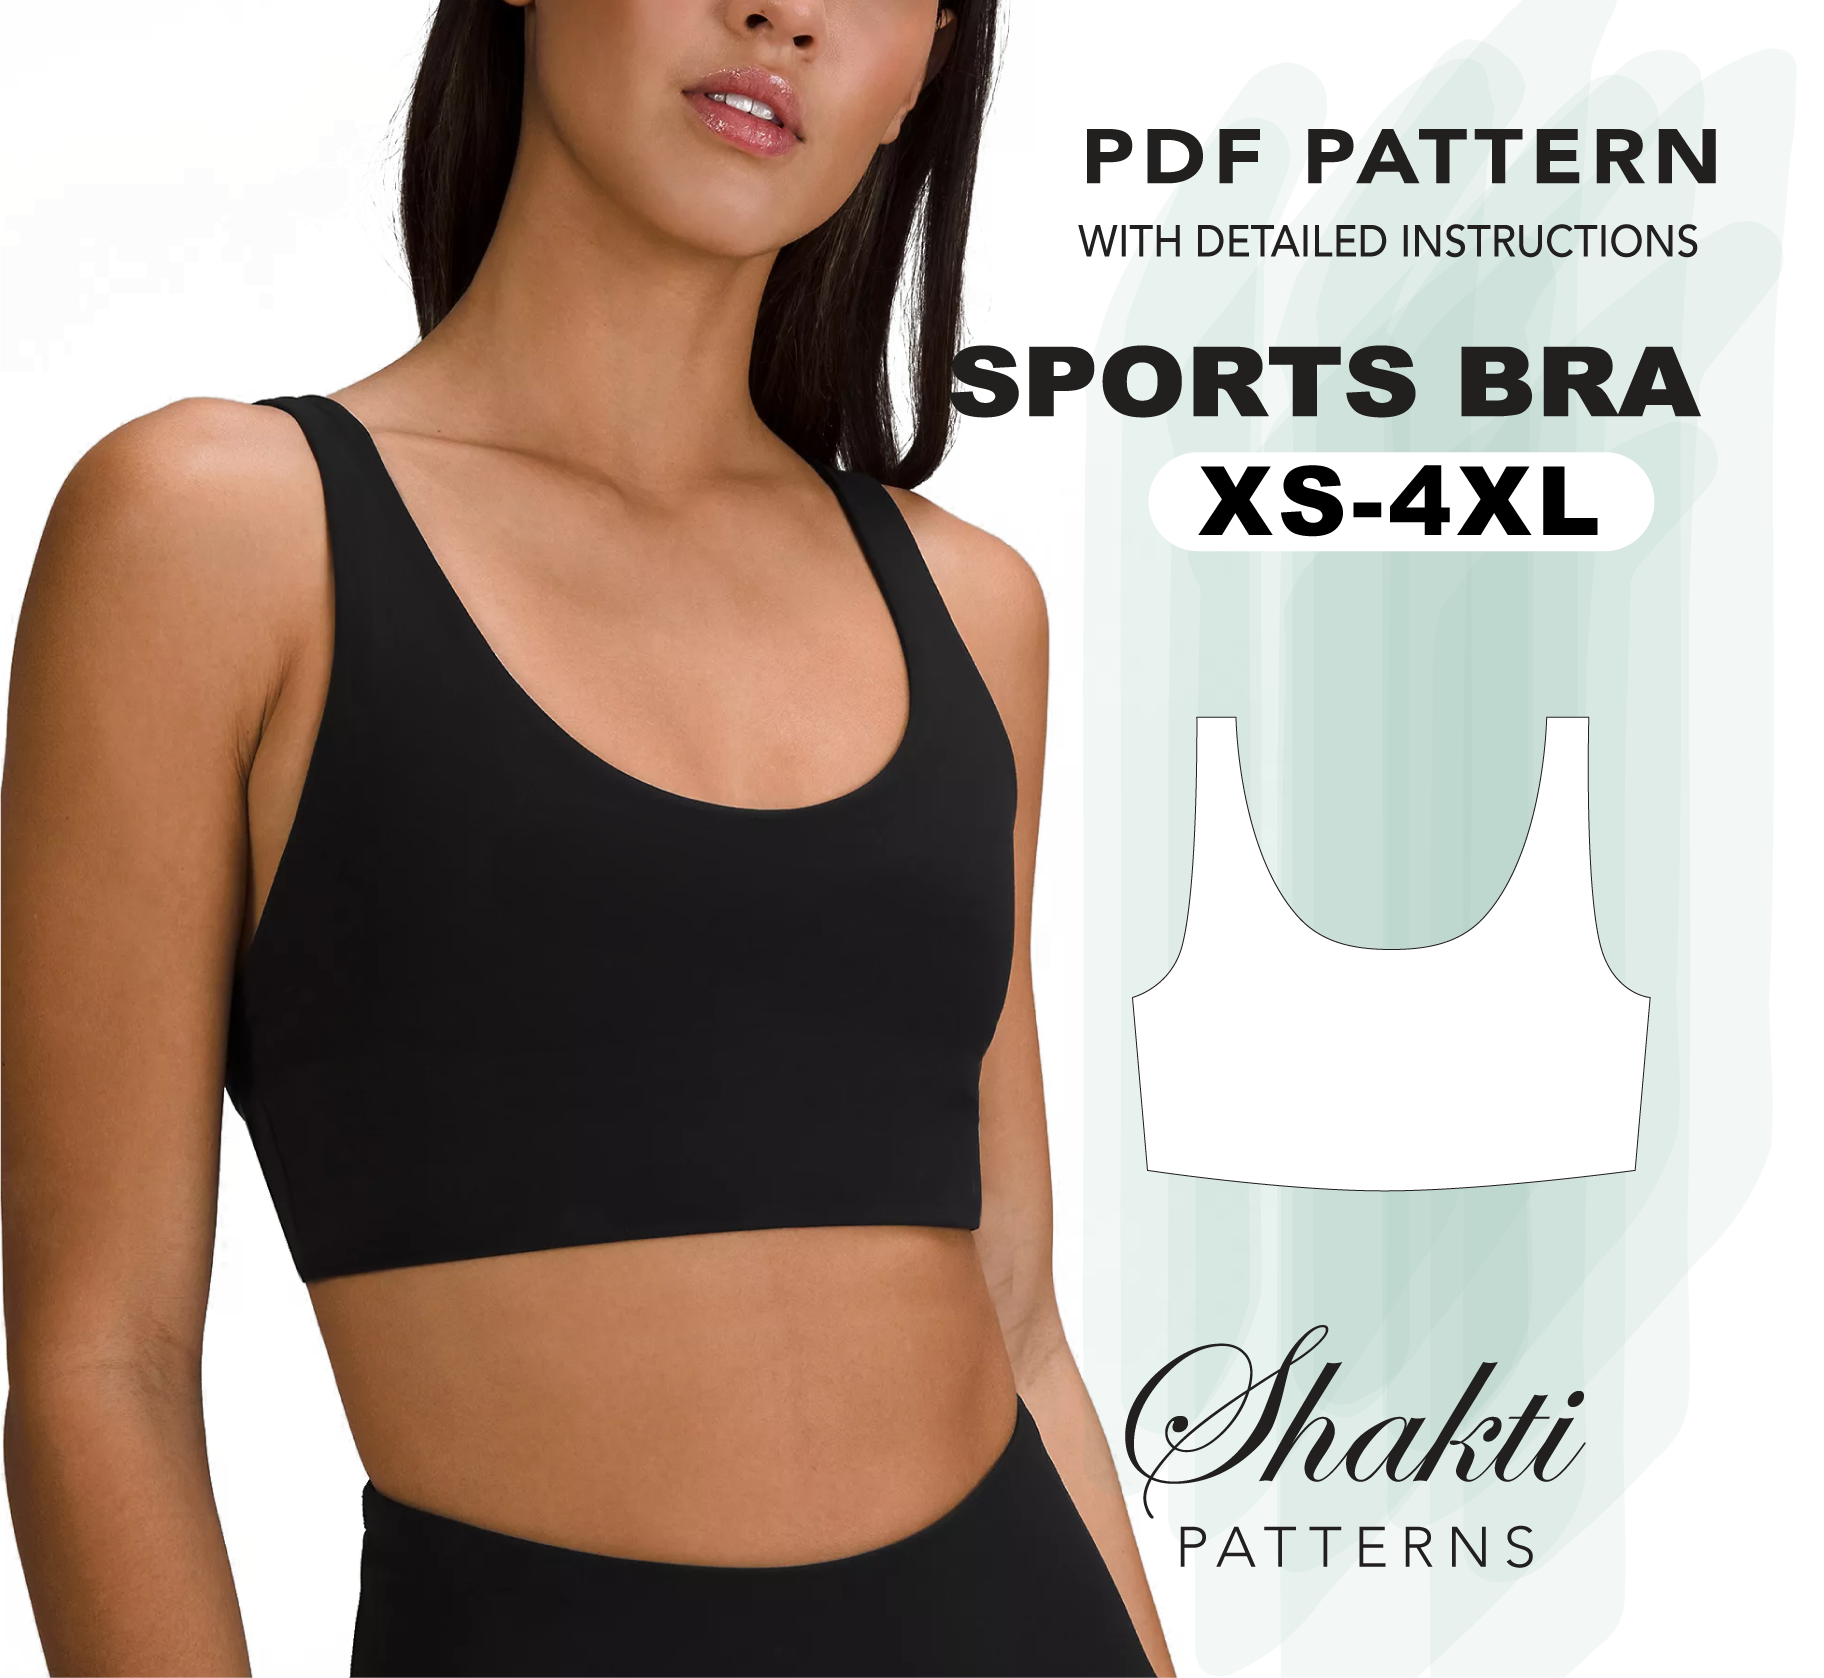 One Shoulder Crop Top Sewing Pattern, Sport Gym Bralette PDF